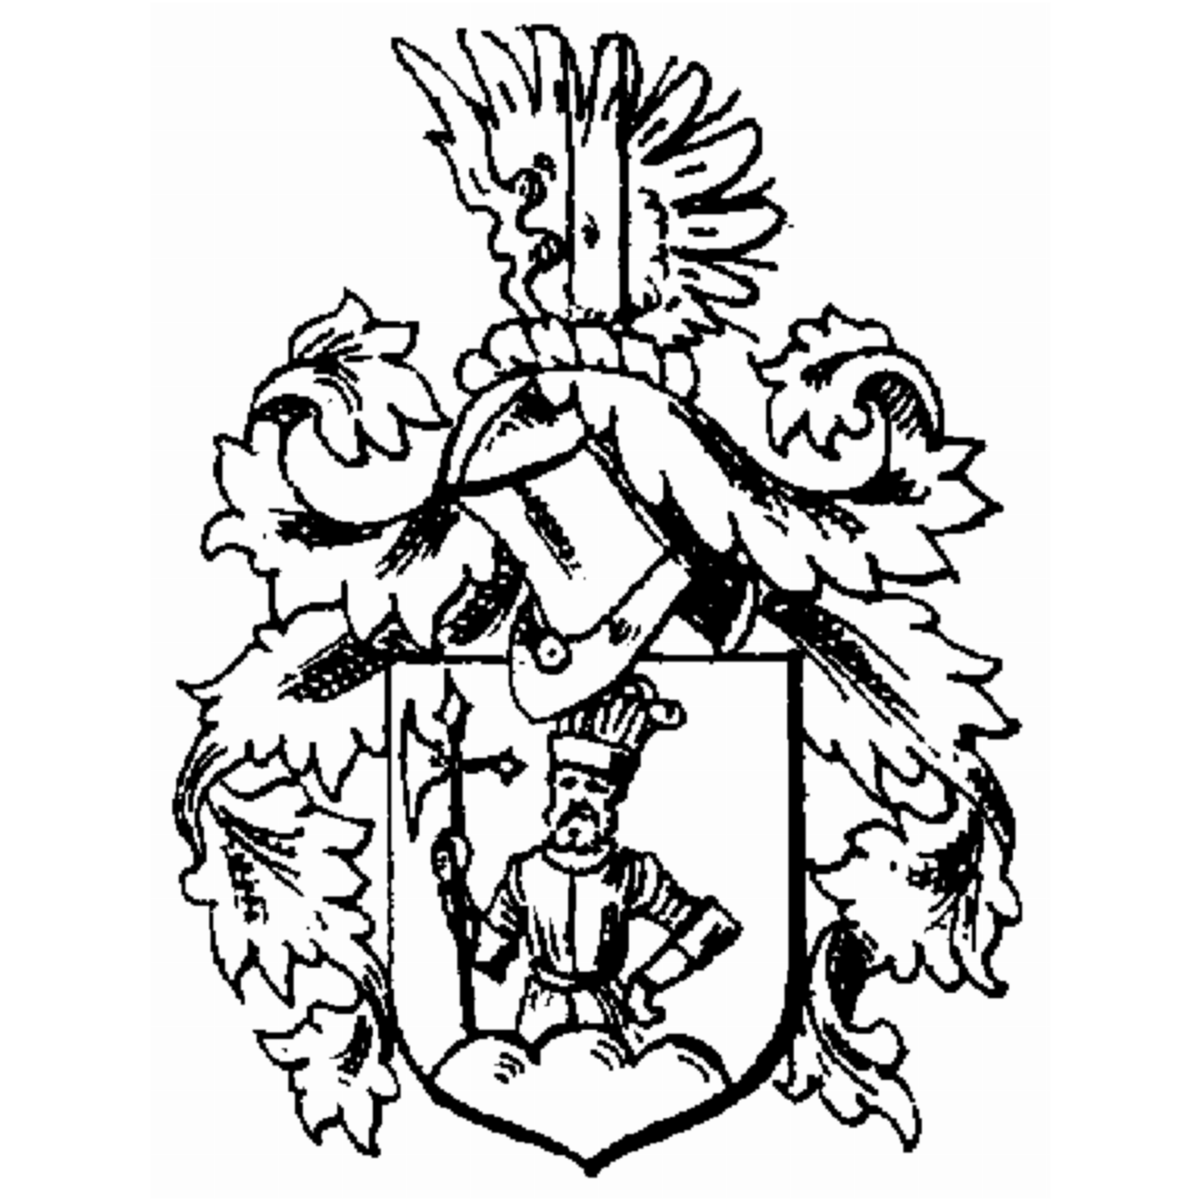 Wappen der Familie Valente